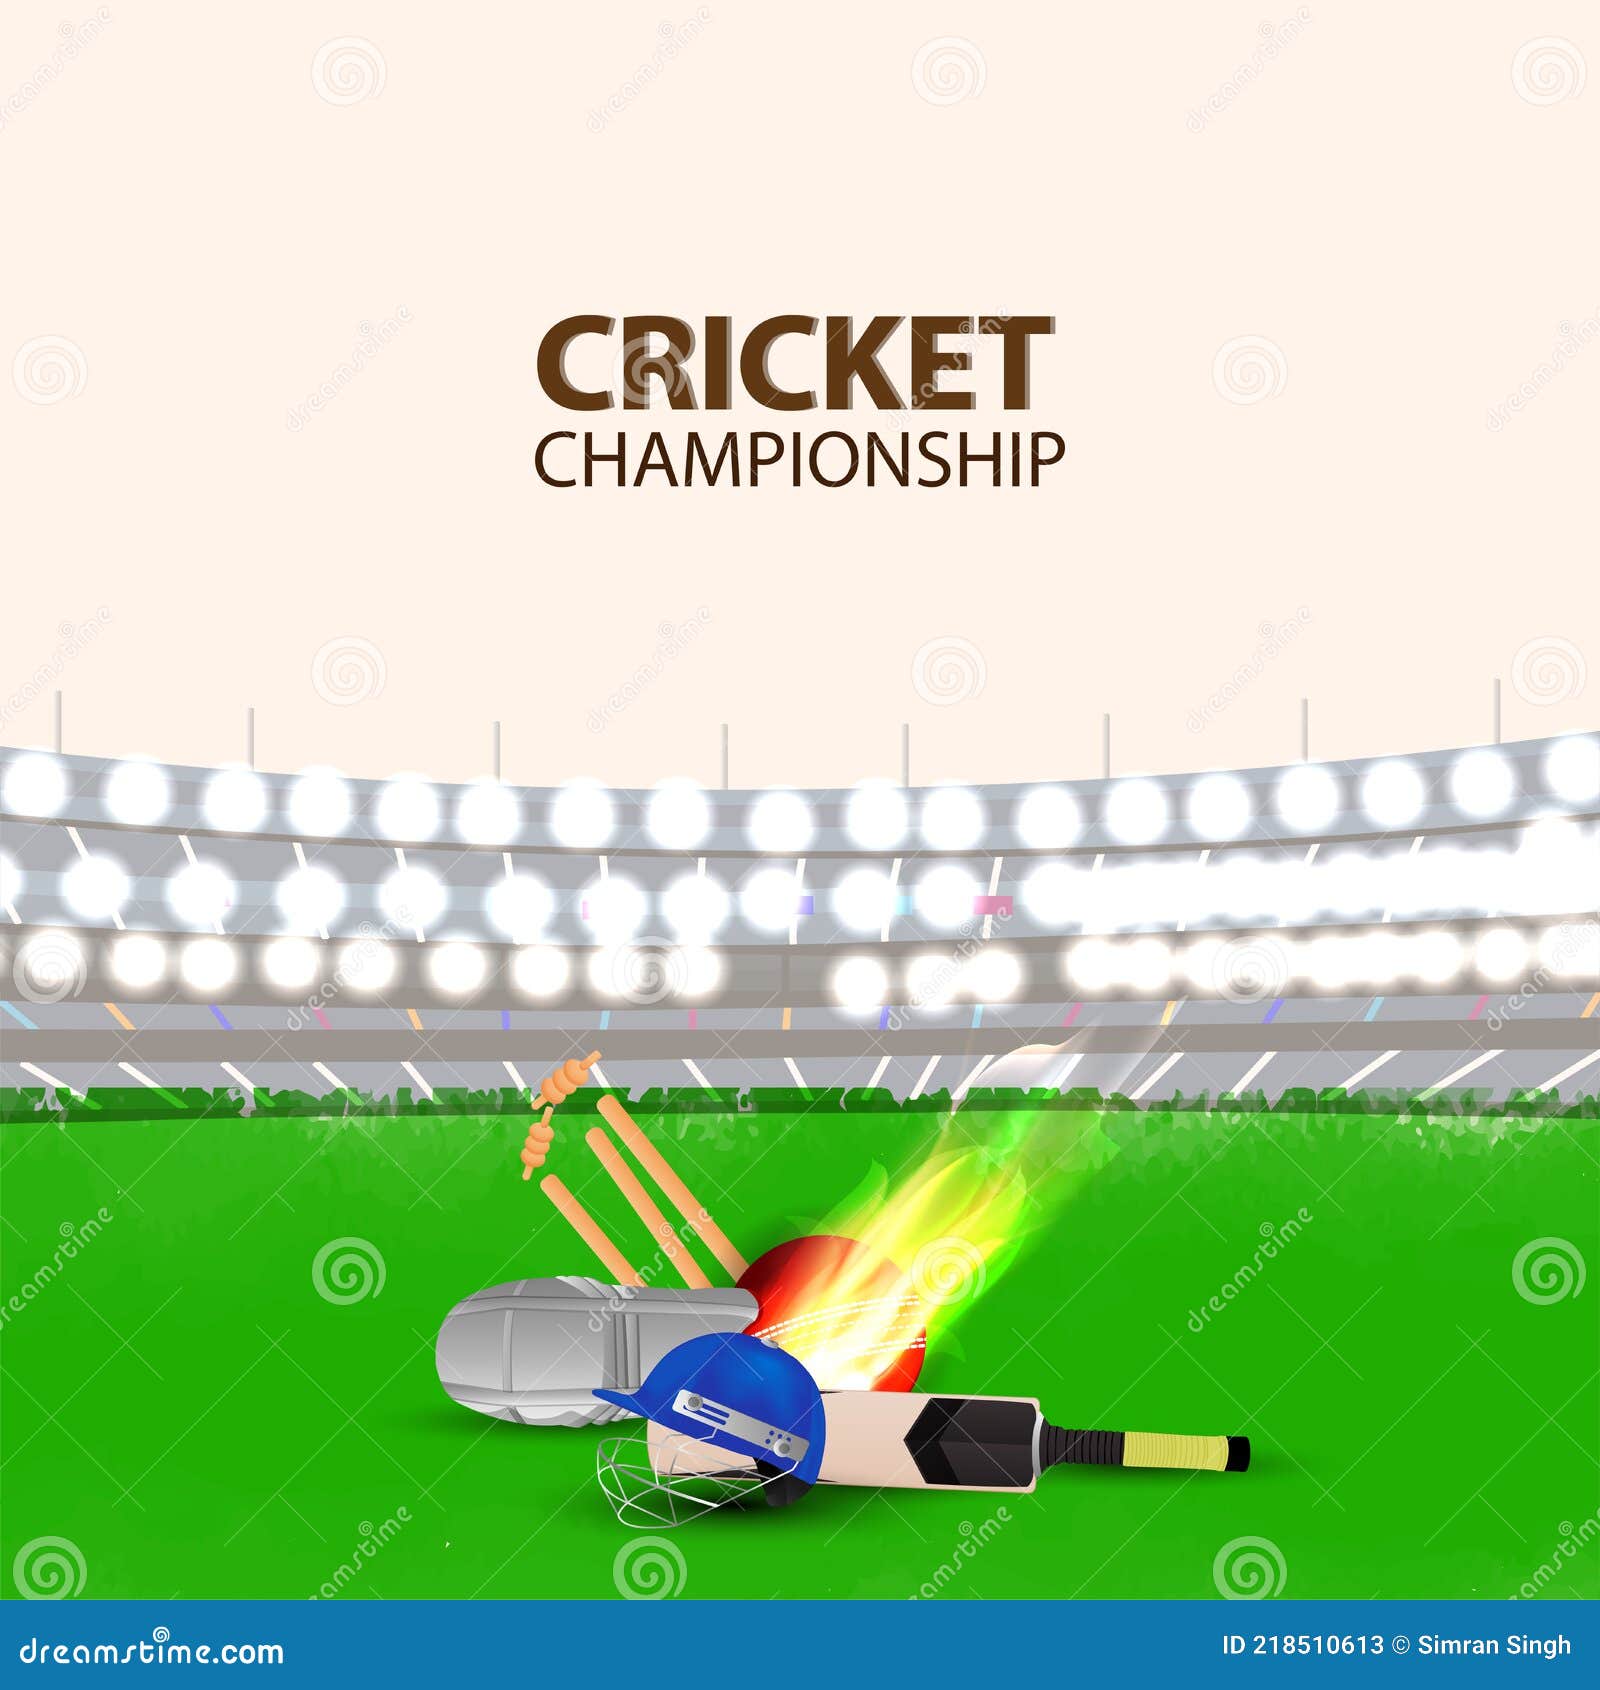 Live Cricket Tournament Poster Banner Design Stock Vector Royalty Free  1432249841  Shutterstock  Cricket poster Latest funny jokes Banner  design